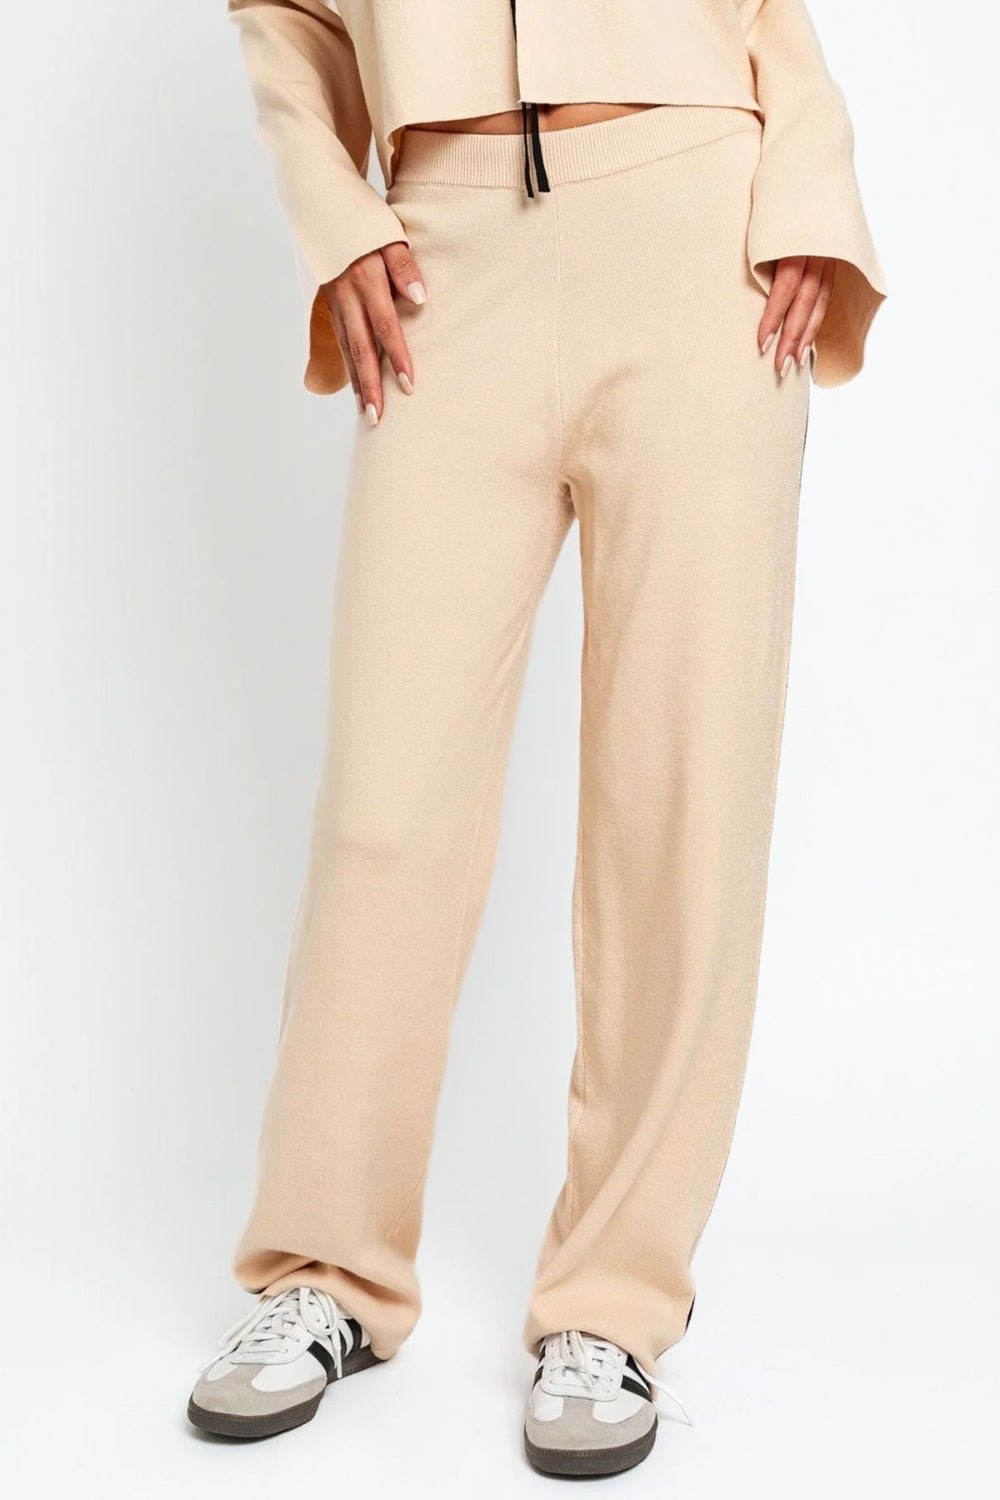 LE LIS COLLECTION Contrast Trim High Waist Wide Leg Sweater Pants - Happily Ever Atchison Shop Co.